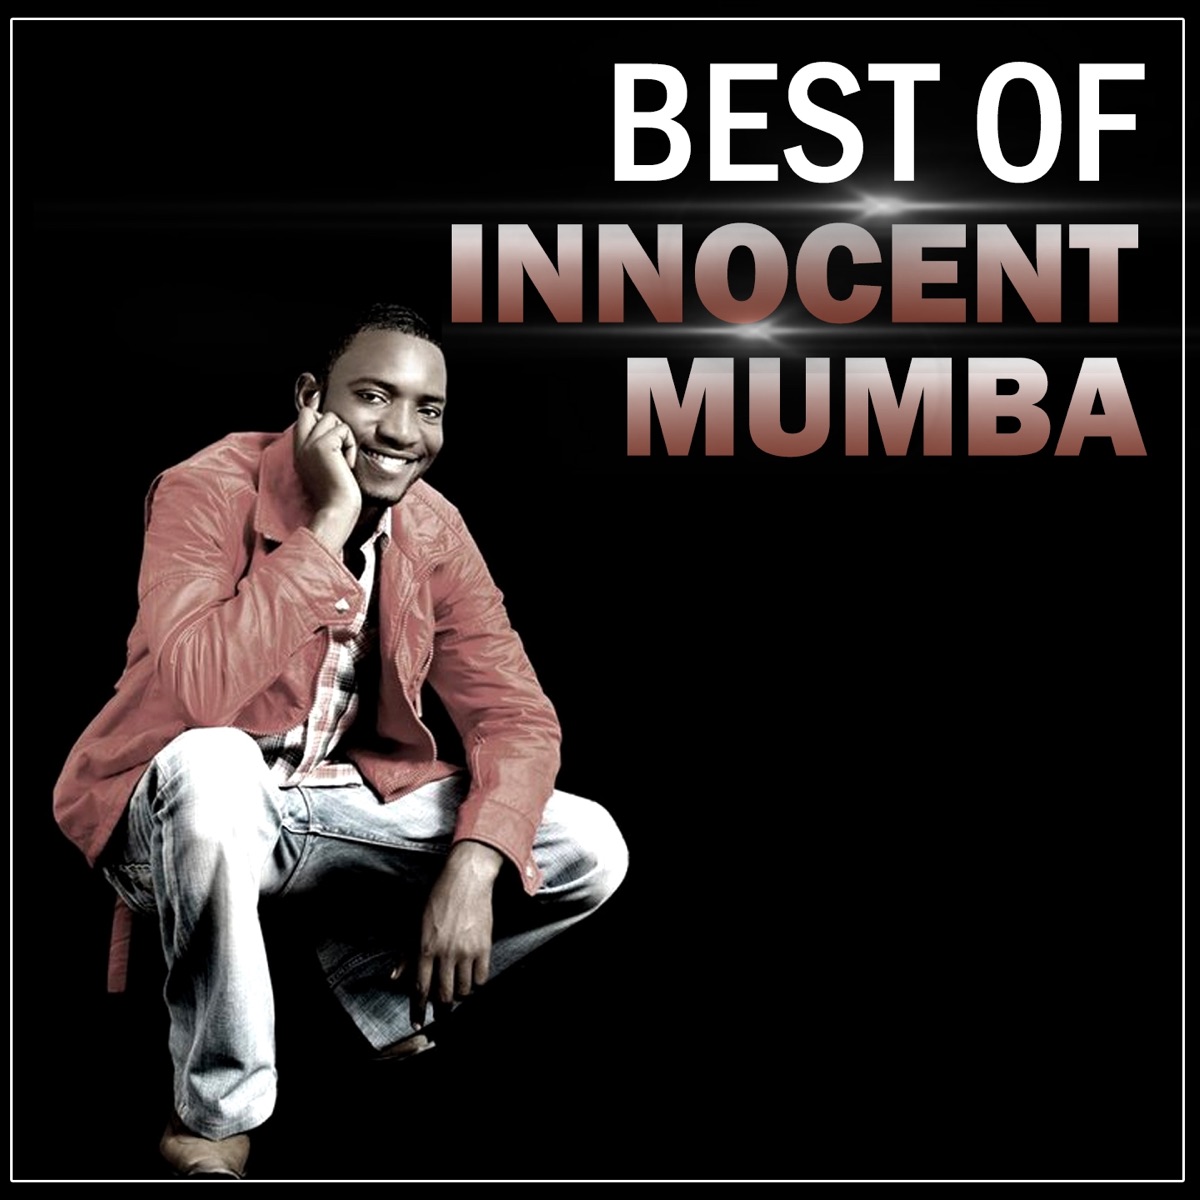 Another Level - Album by Innocent Mumba - Apple Music